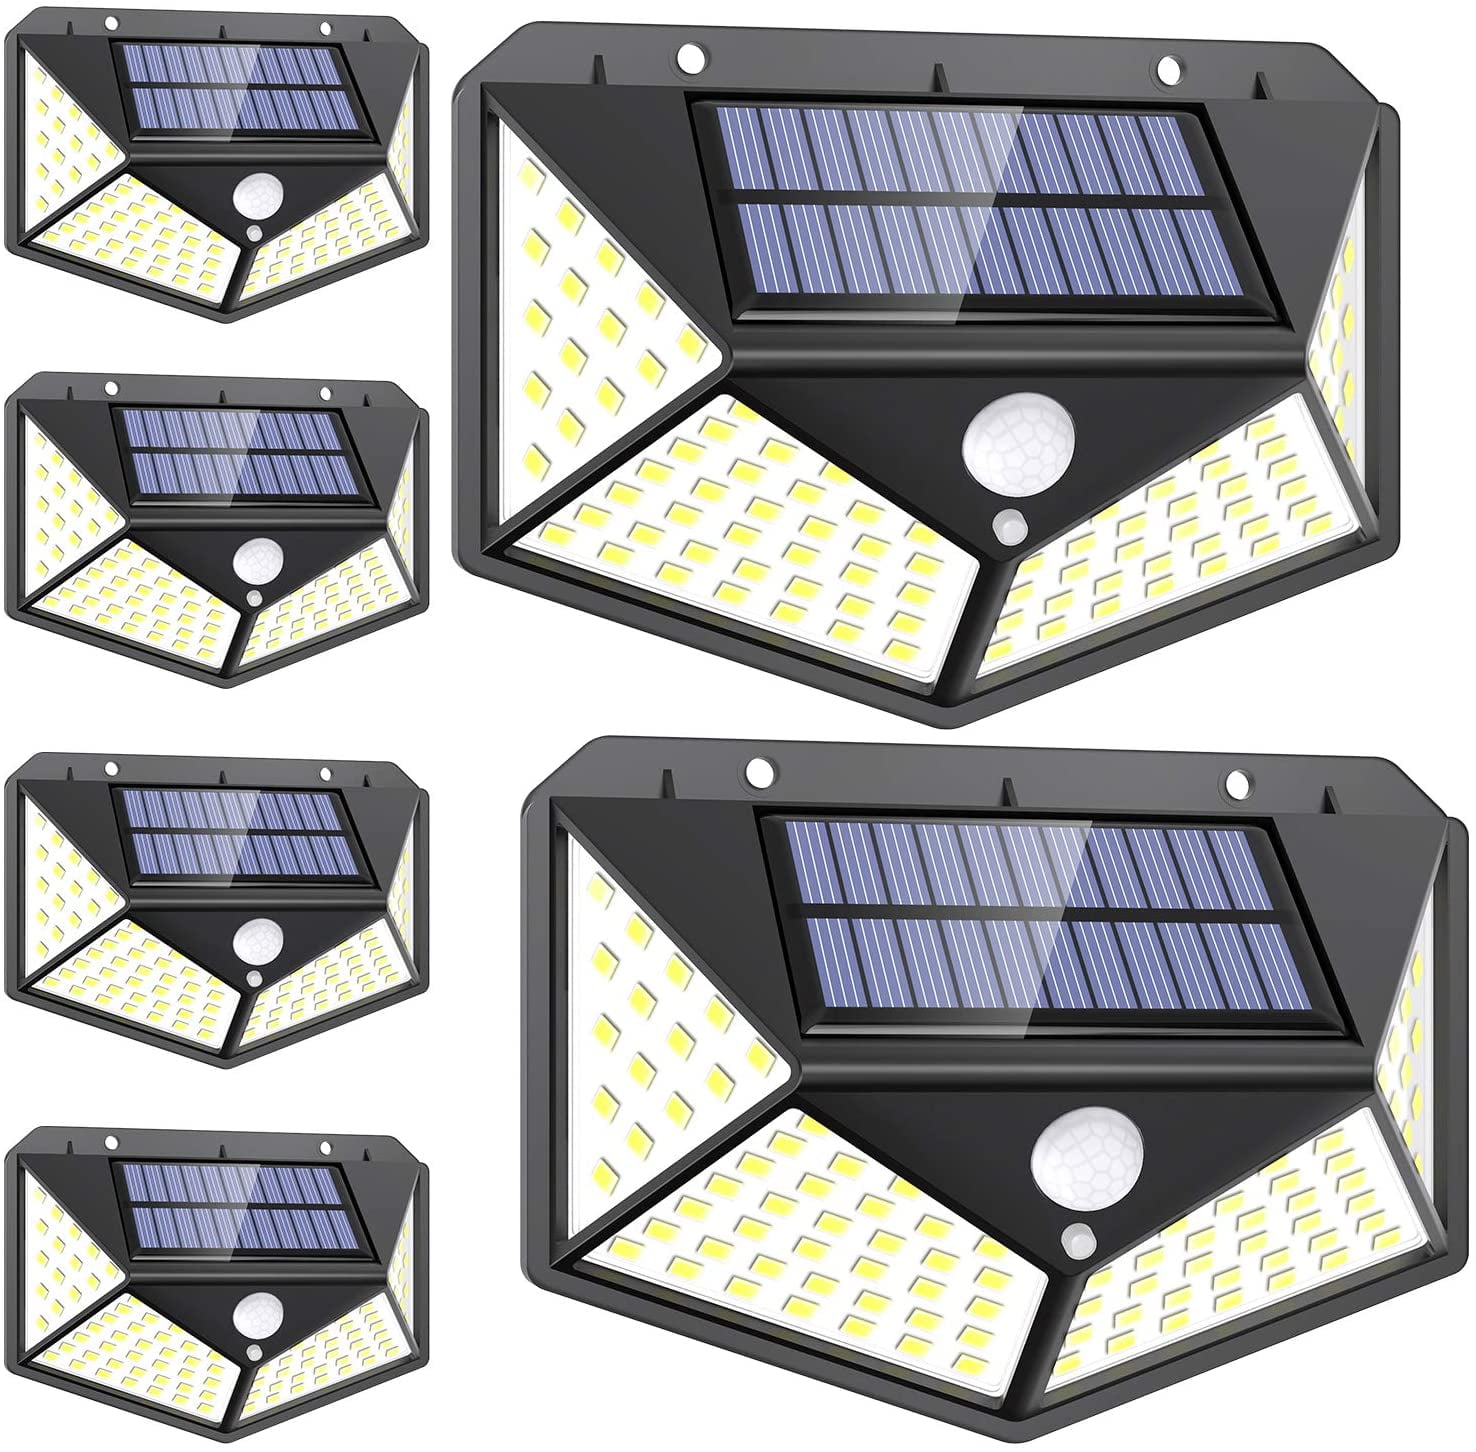 68/100LED Solar Power Wall Light PIR Sensor Security Outdoor Garden Yard Lamp 